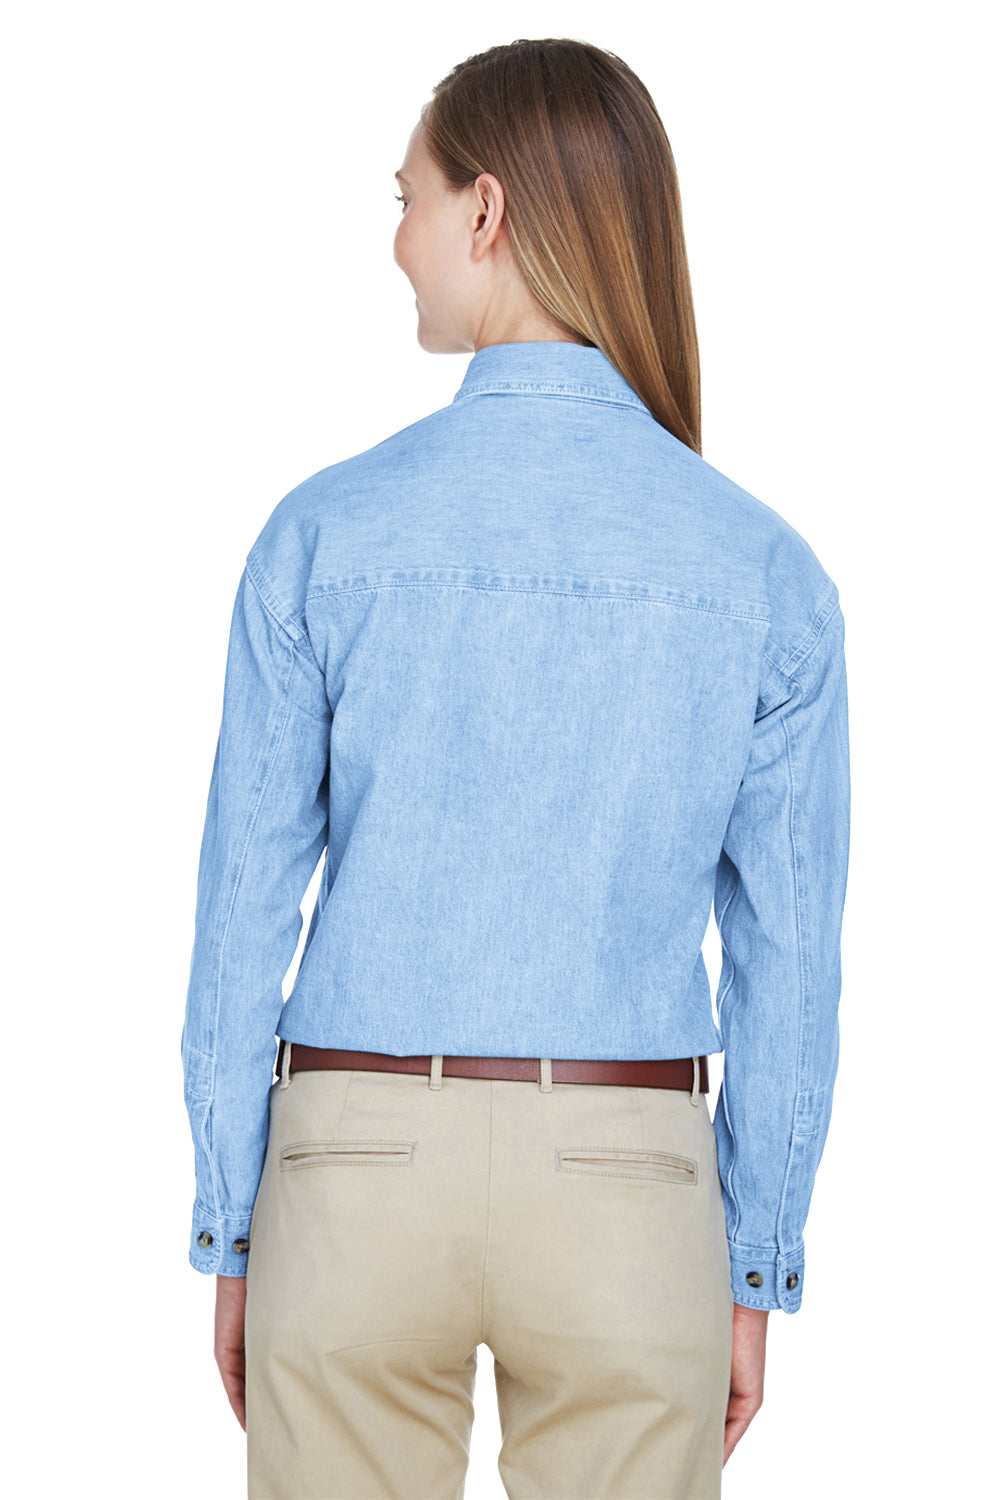 UltraClub 8966 Womens Cypress Denim Long Sleeve Button Down Shirt Light Blue Back